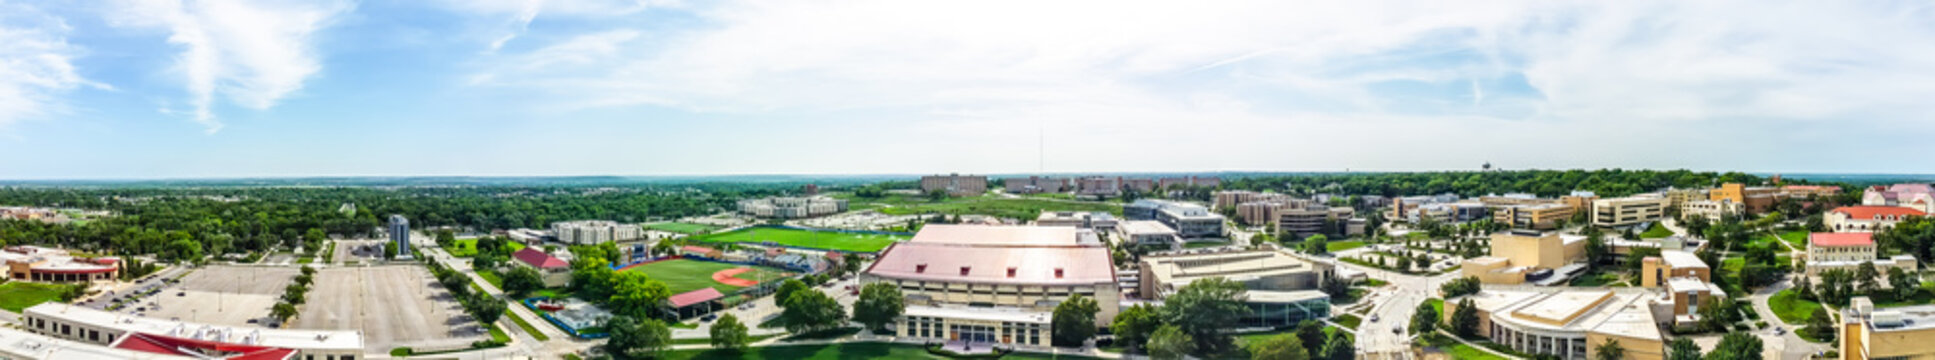 Lawrence, Kansas, USA - 7.2023 - Drone view of the University of Kansas Jayhawks college campus. 